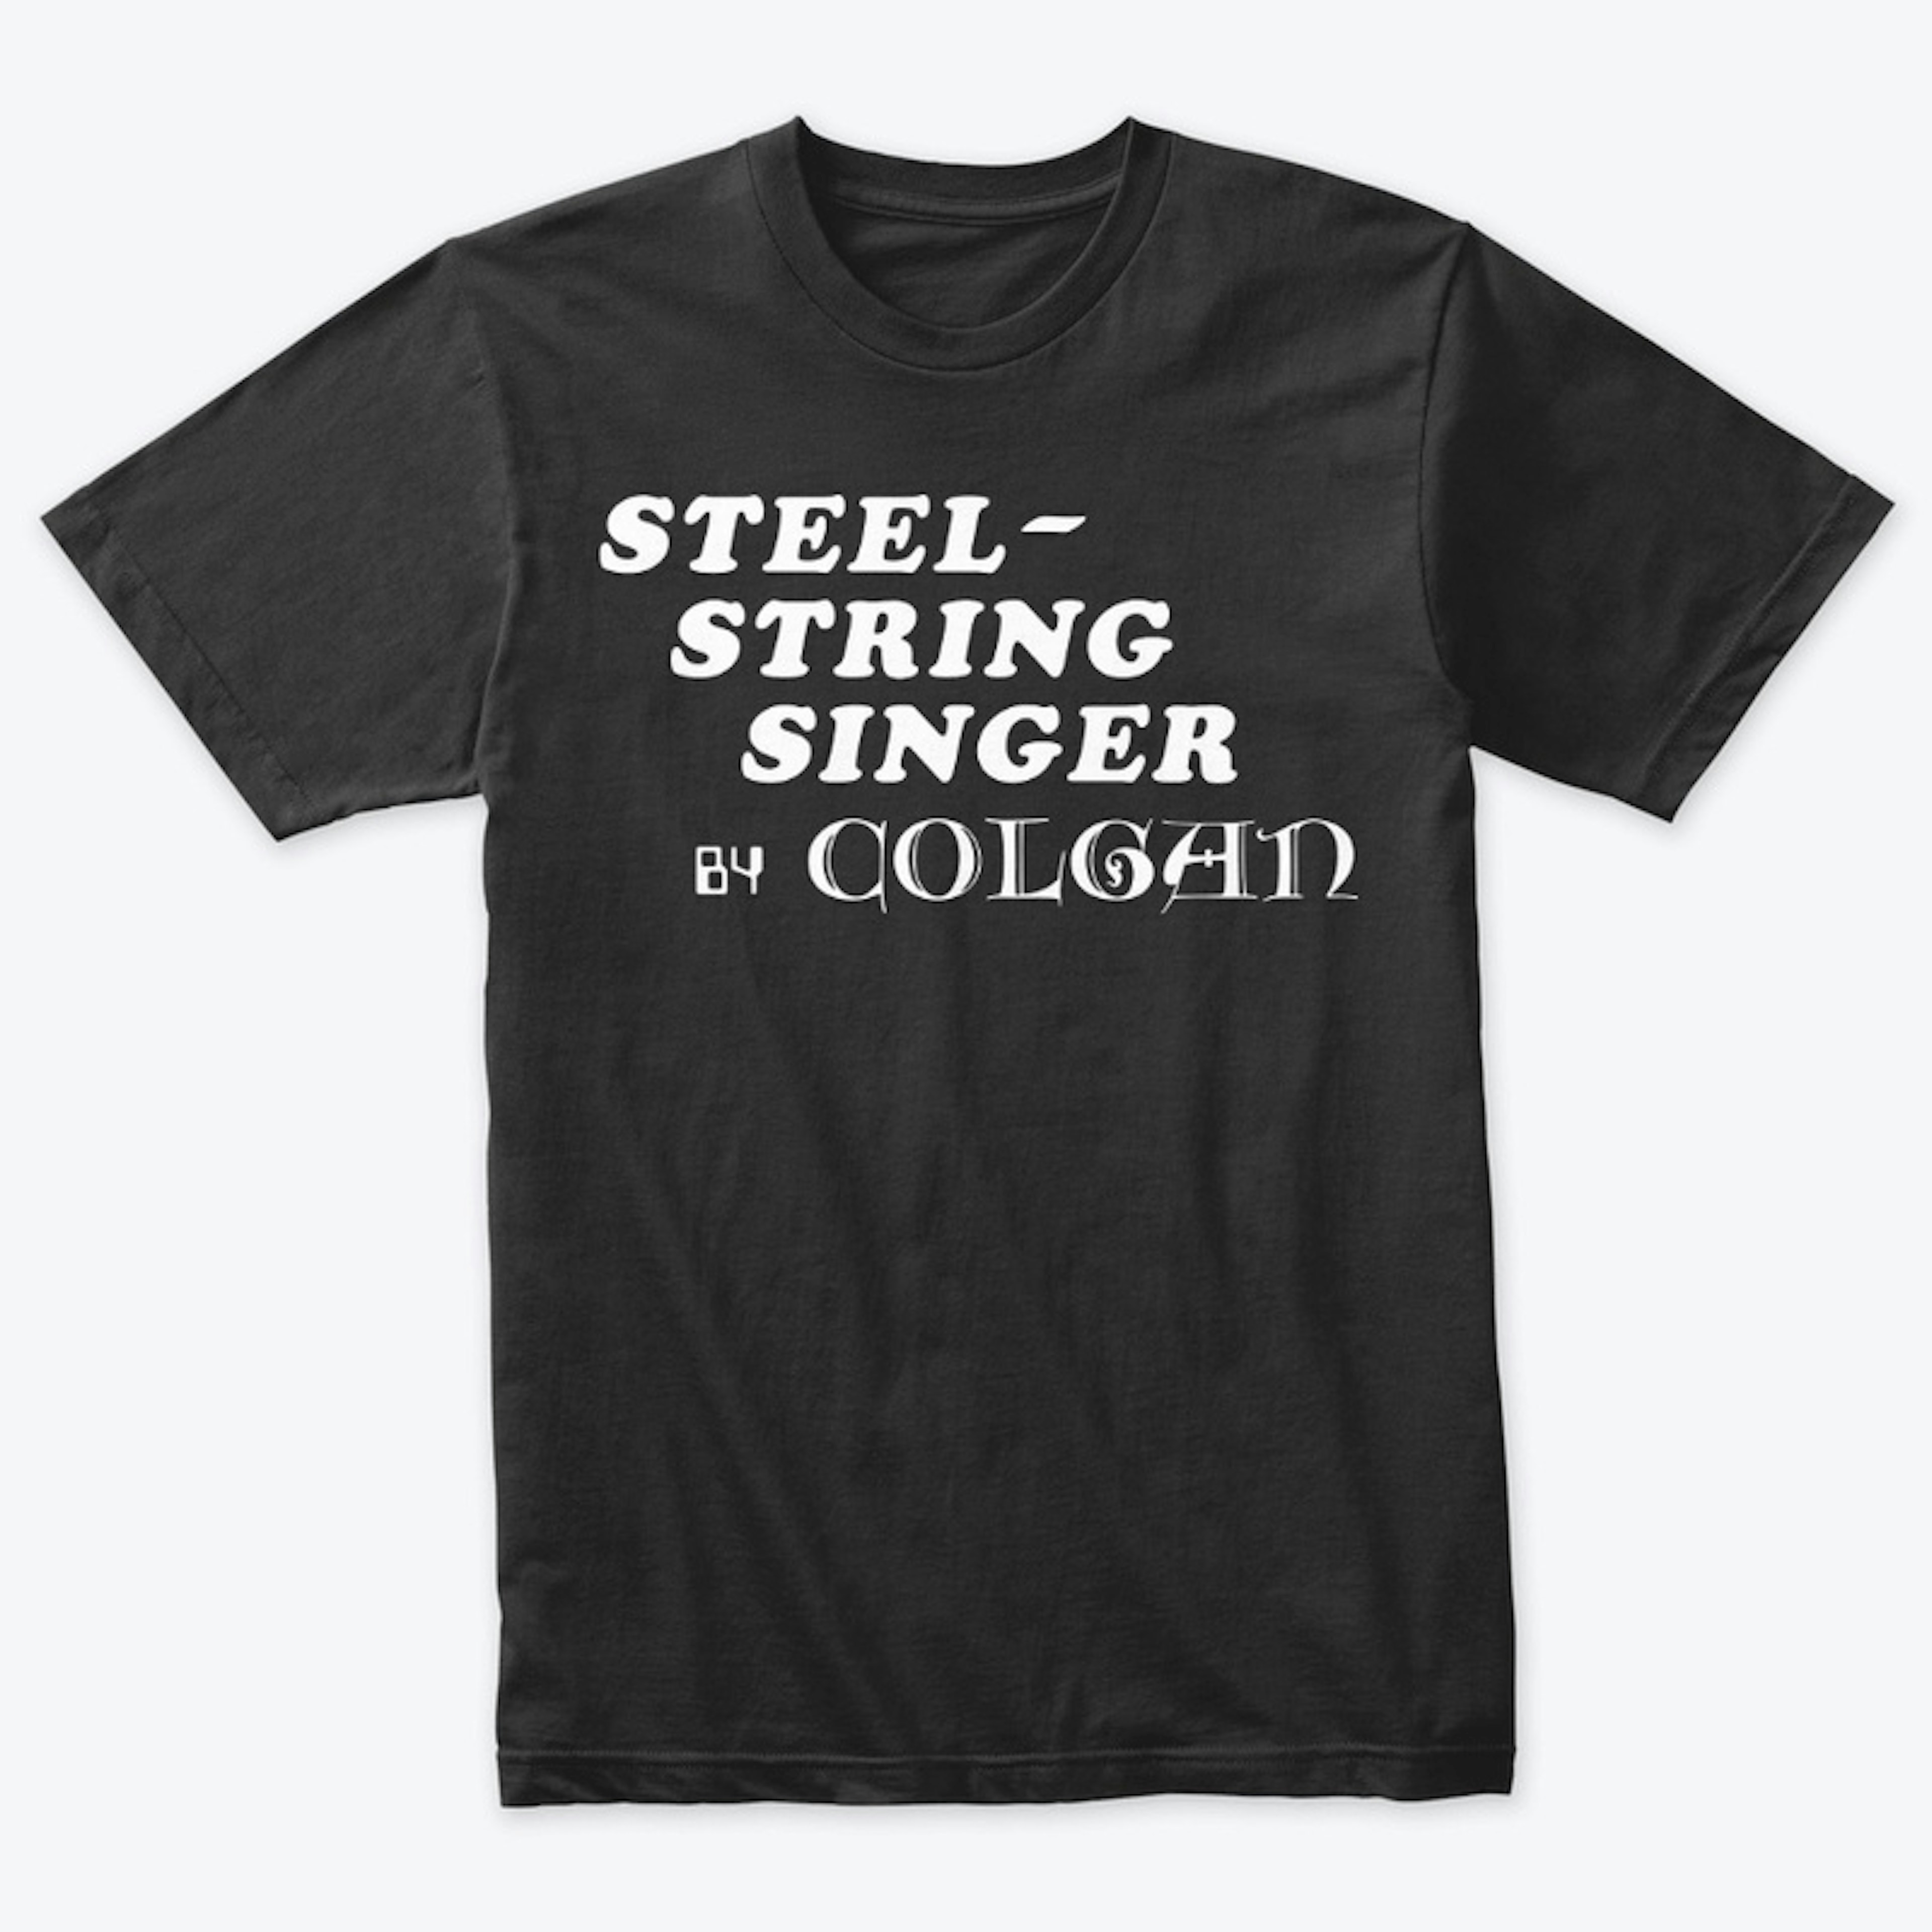 Steel String Singer #002 By Colgan White